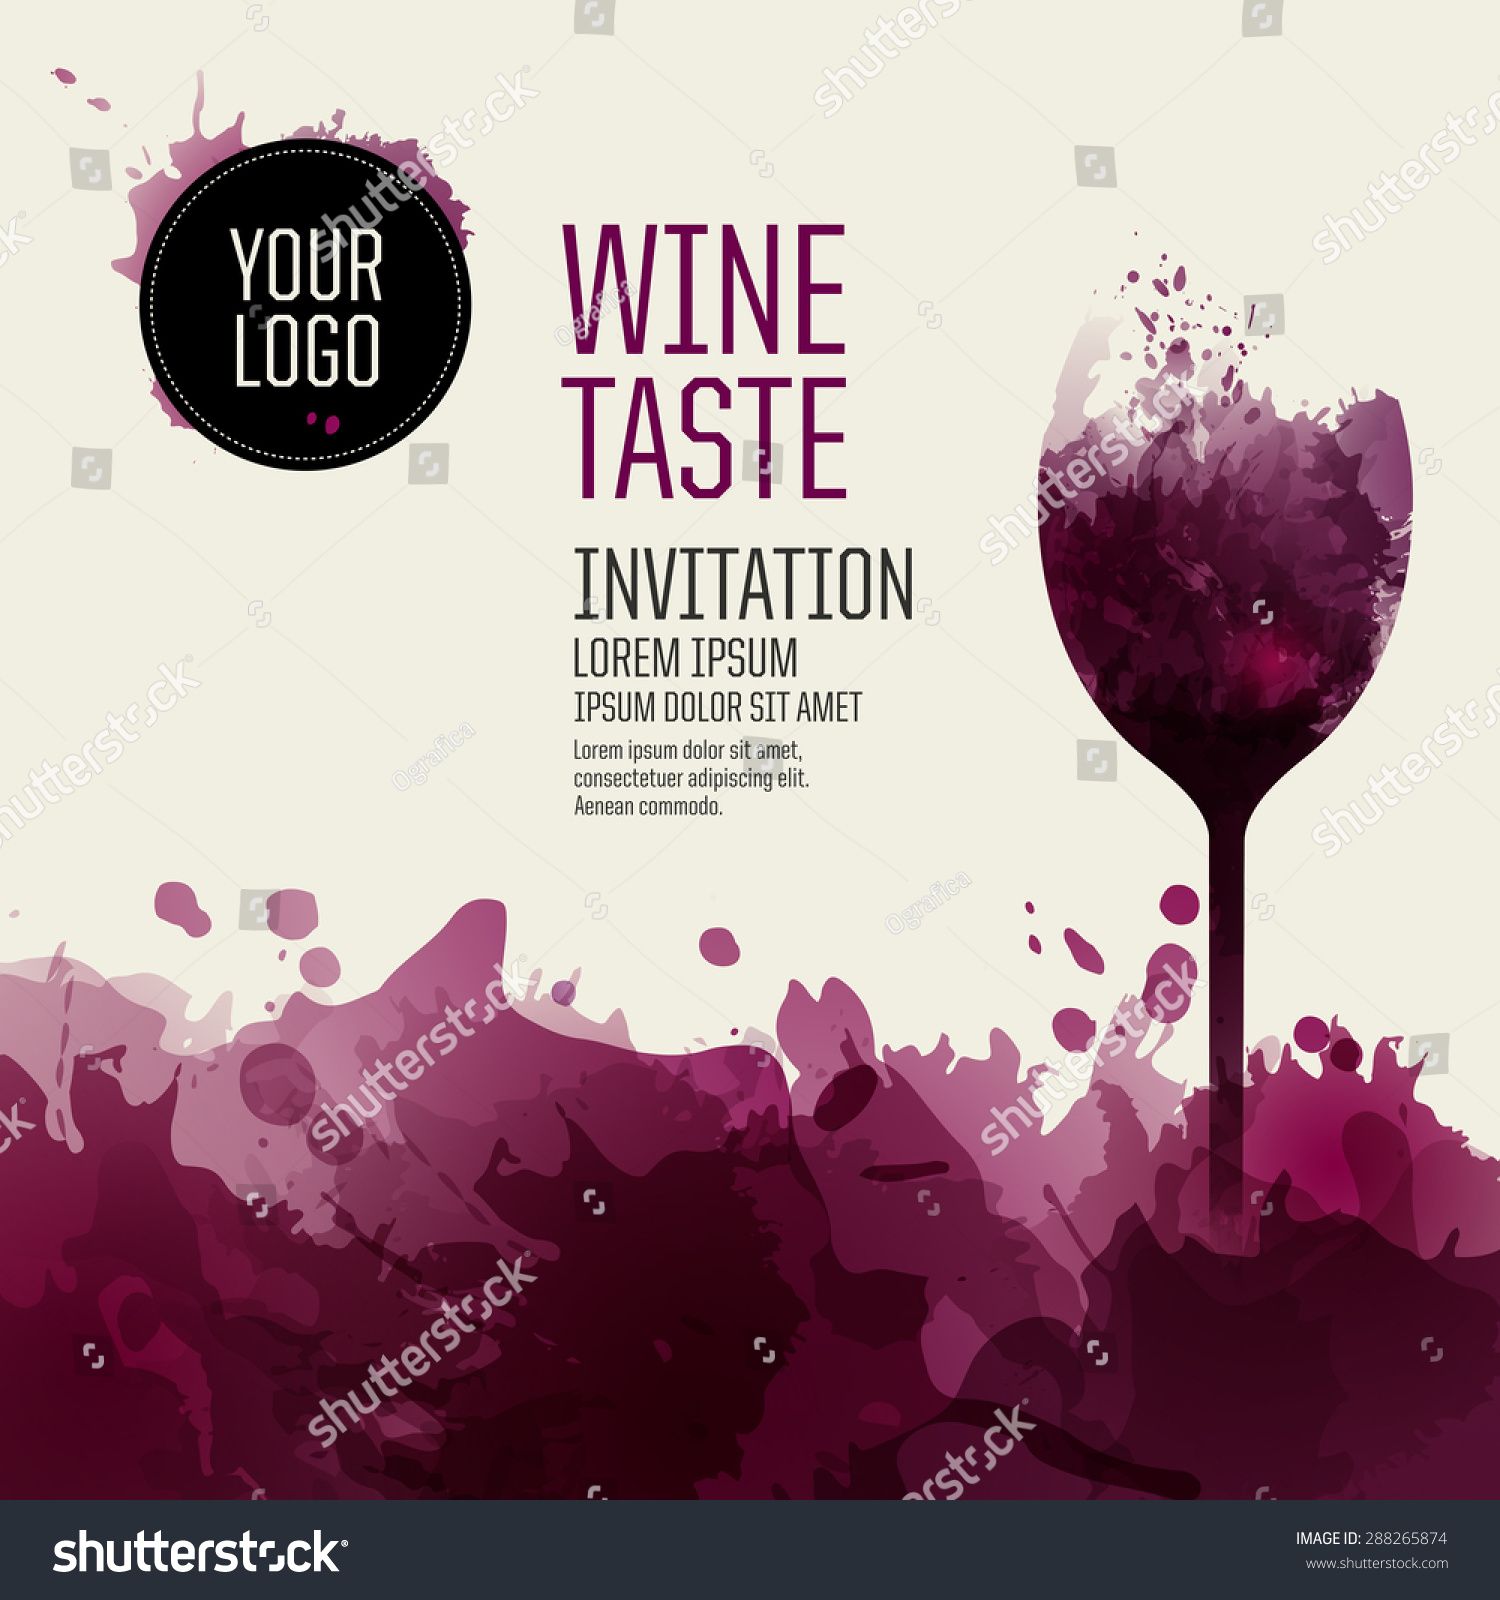 Wine Tasting Invitation Template from image.shutterstock.com